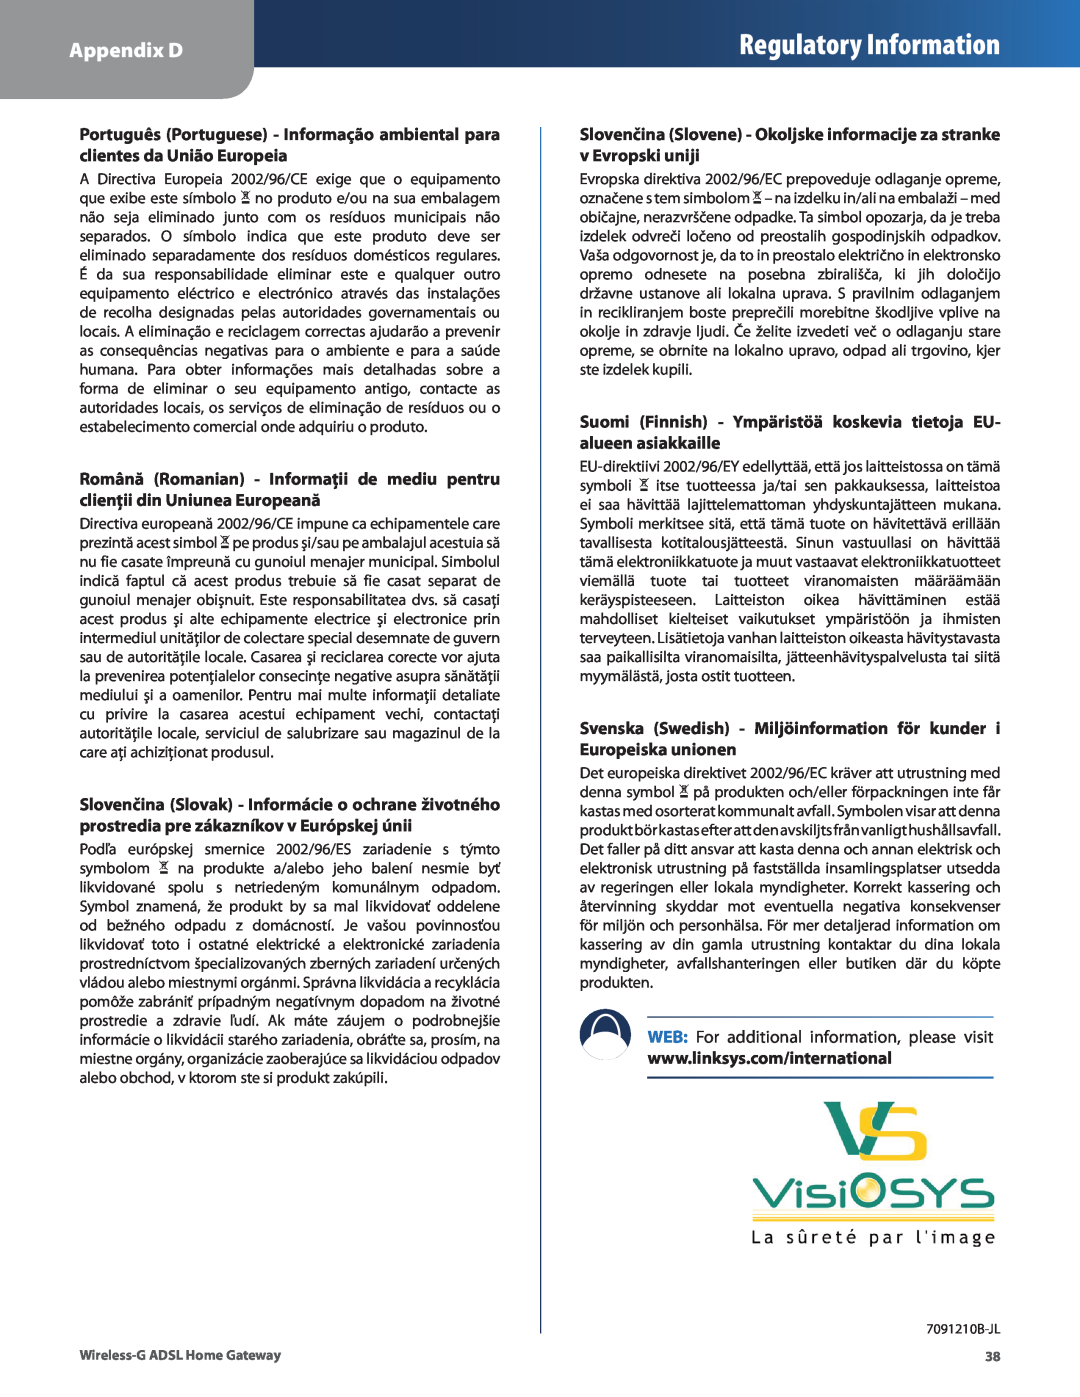 Linksys WAG200G Regulatory Information, Appendix D, Slovenčina Slovene - Okoljske informacije za stranke v Evropski uniji 